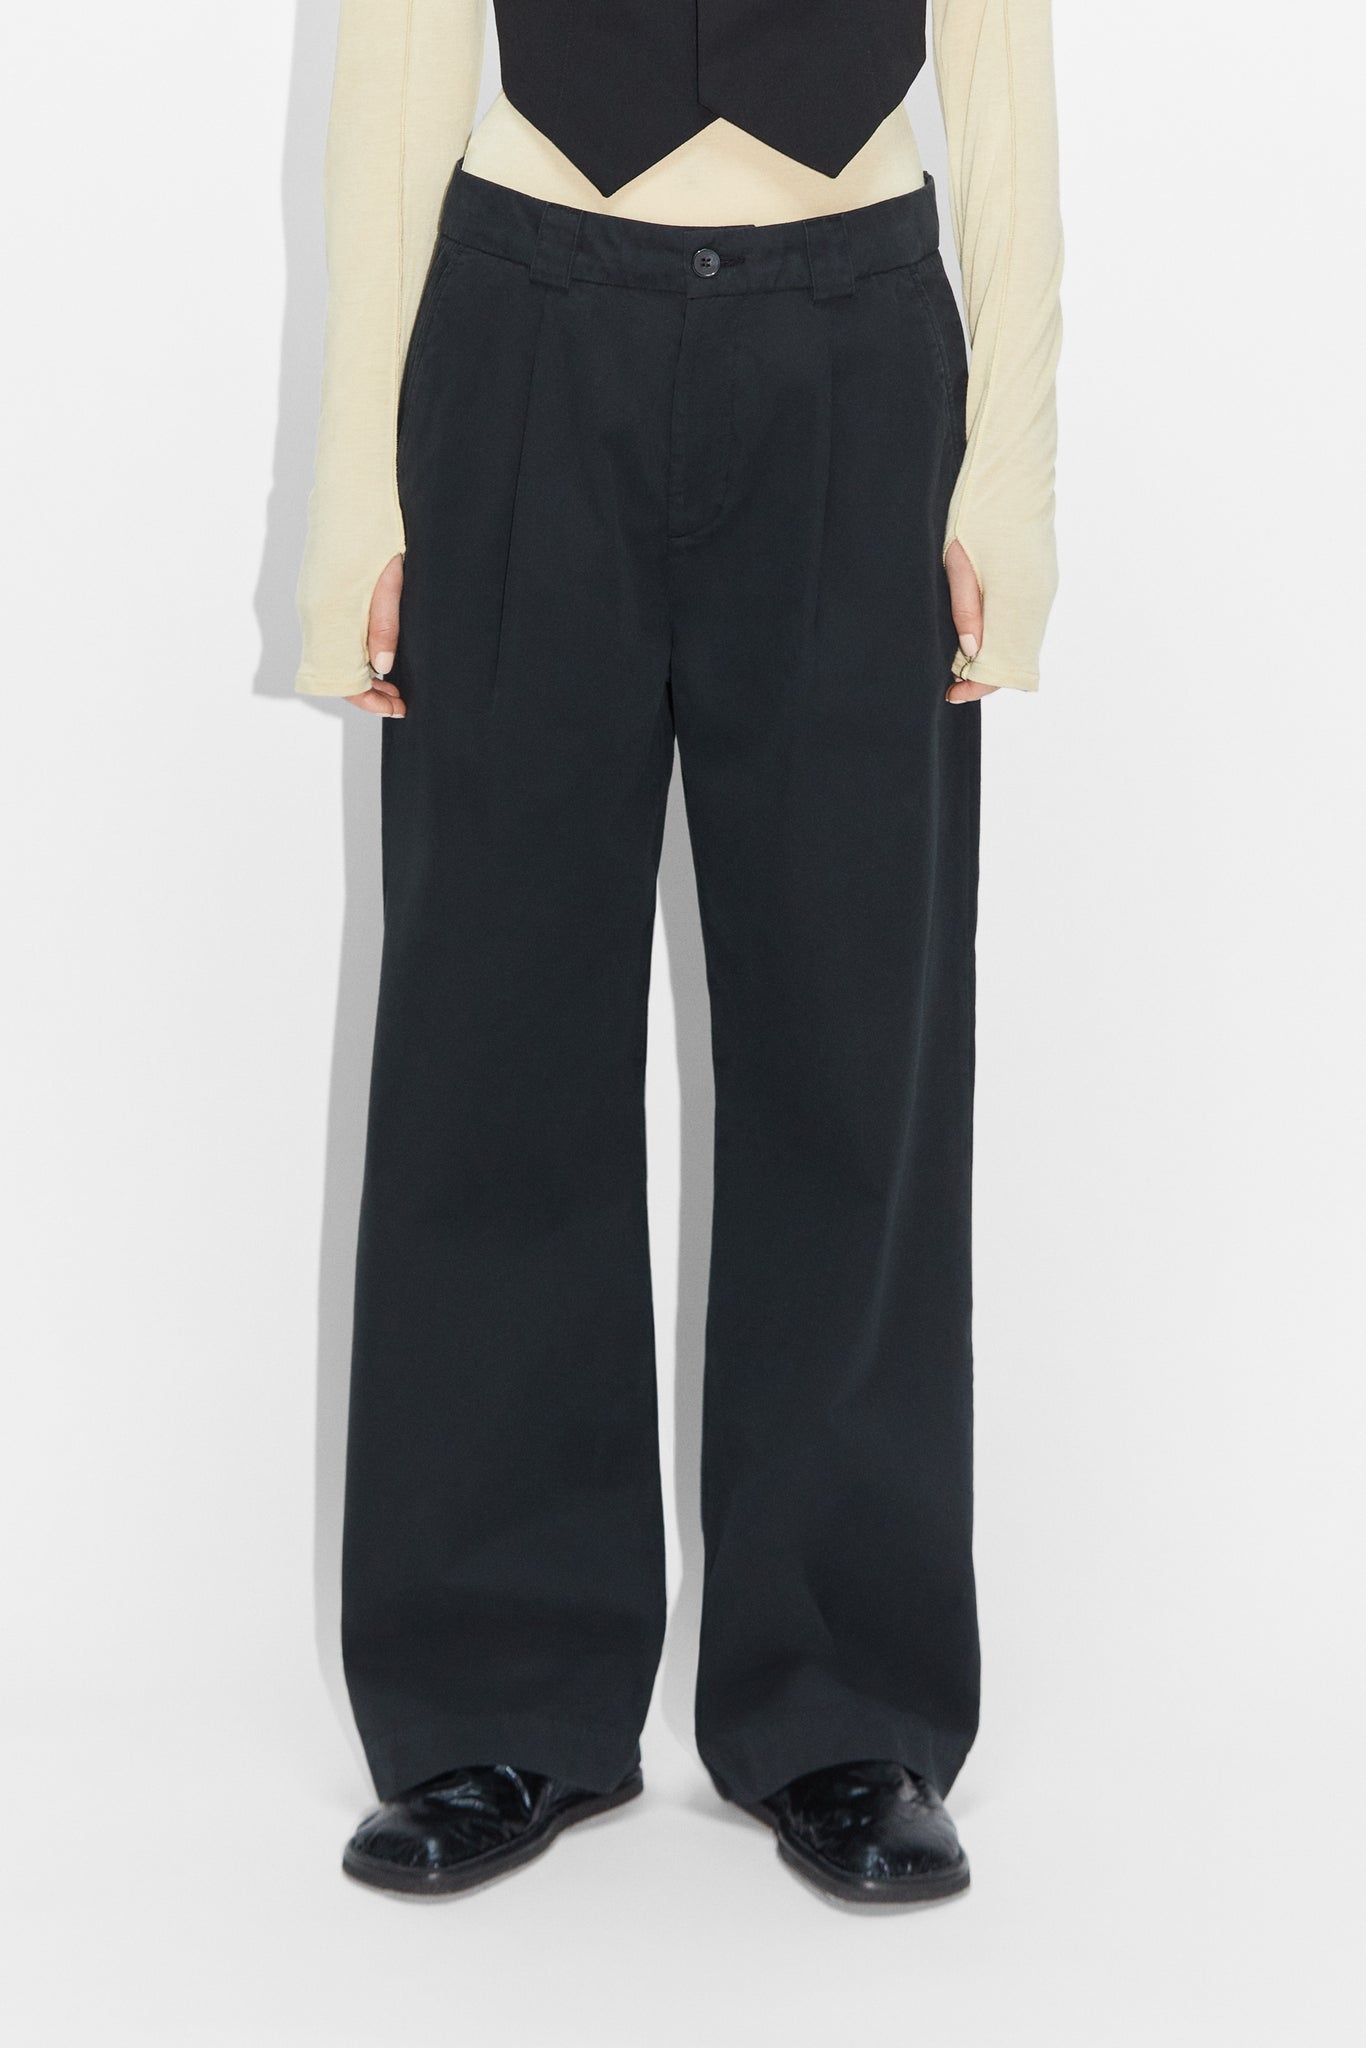 MAENIQUE - Hawkin line Faded denim trousers - Codibook.